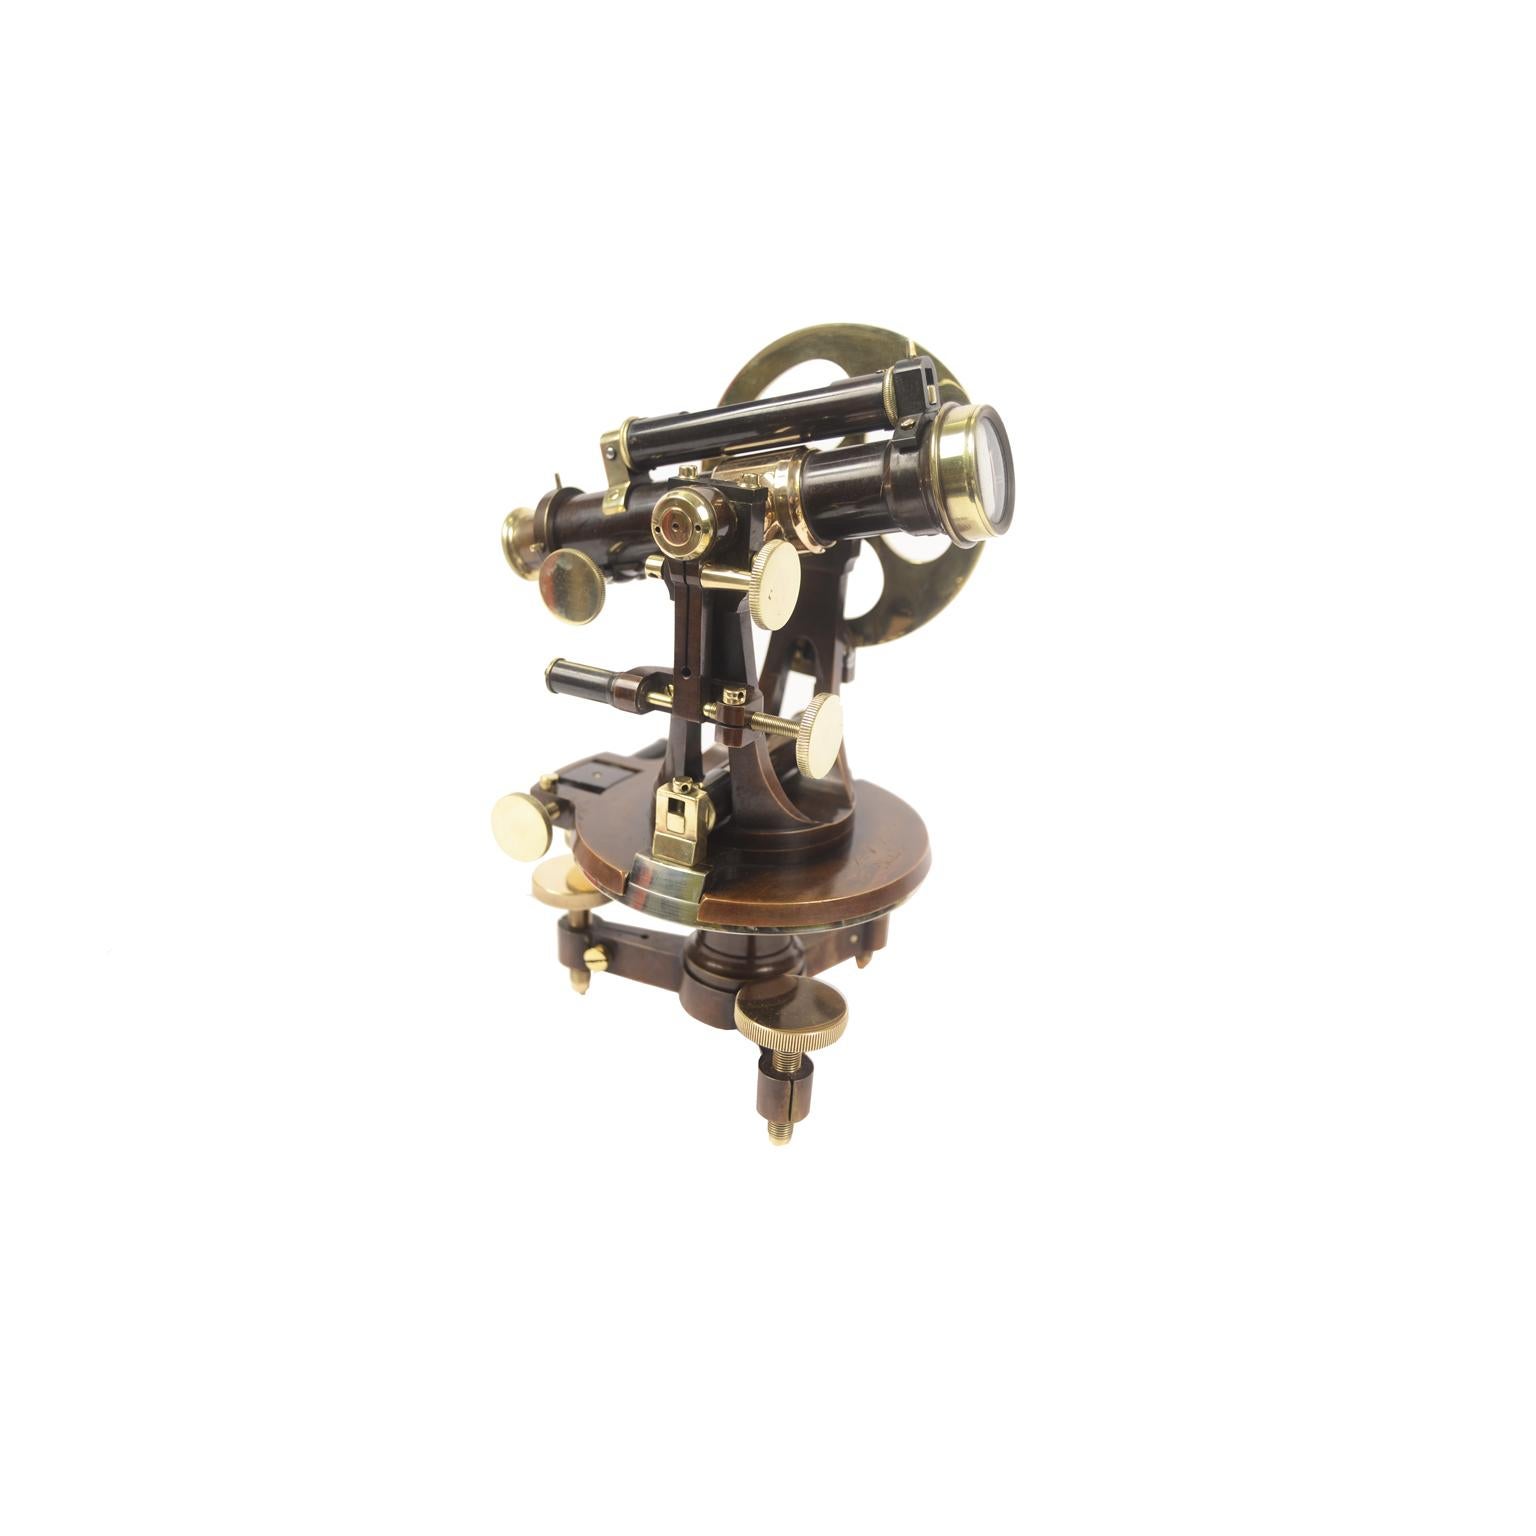 1860 Antique Surveyor's Brass Burnished Transit Tacheometer by C. Merli Milano 3